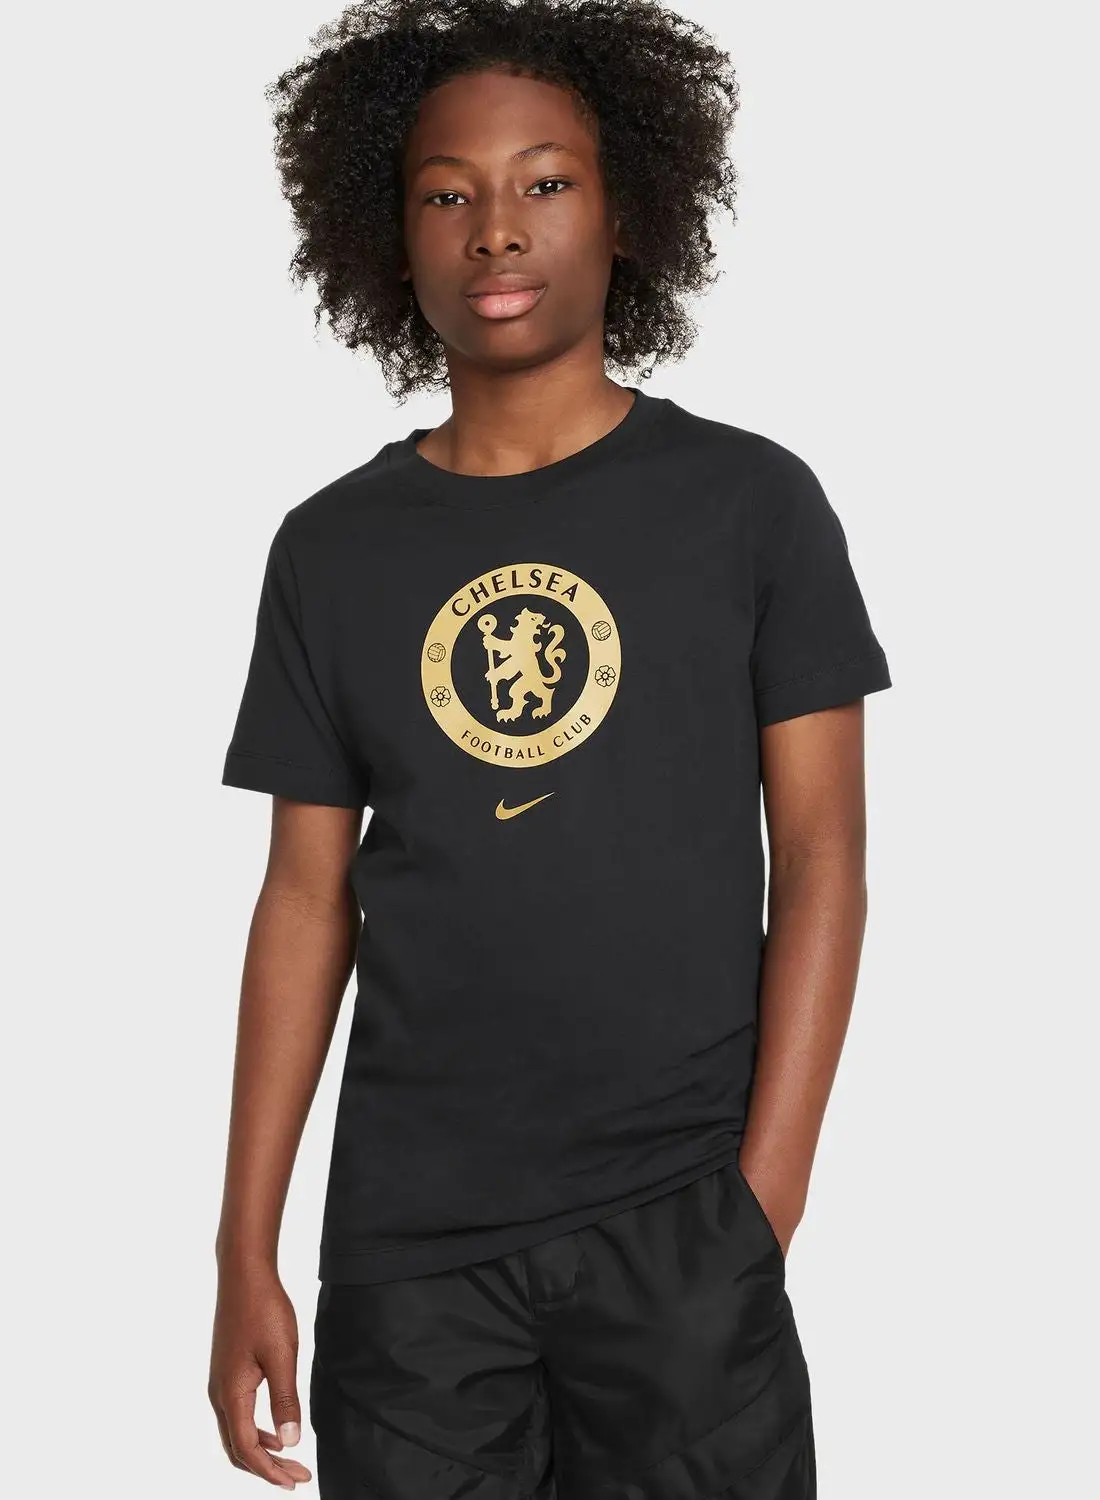 Nike Kids Chelsea Fc Crest T-Shirt